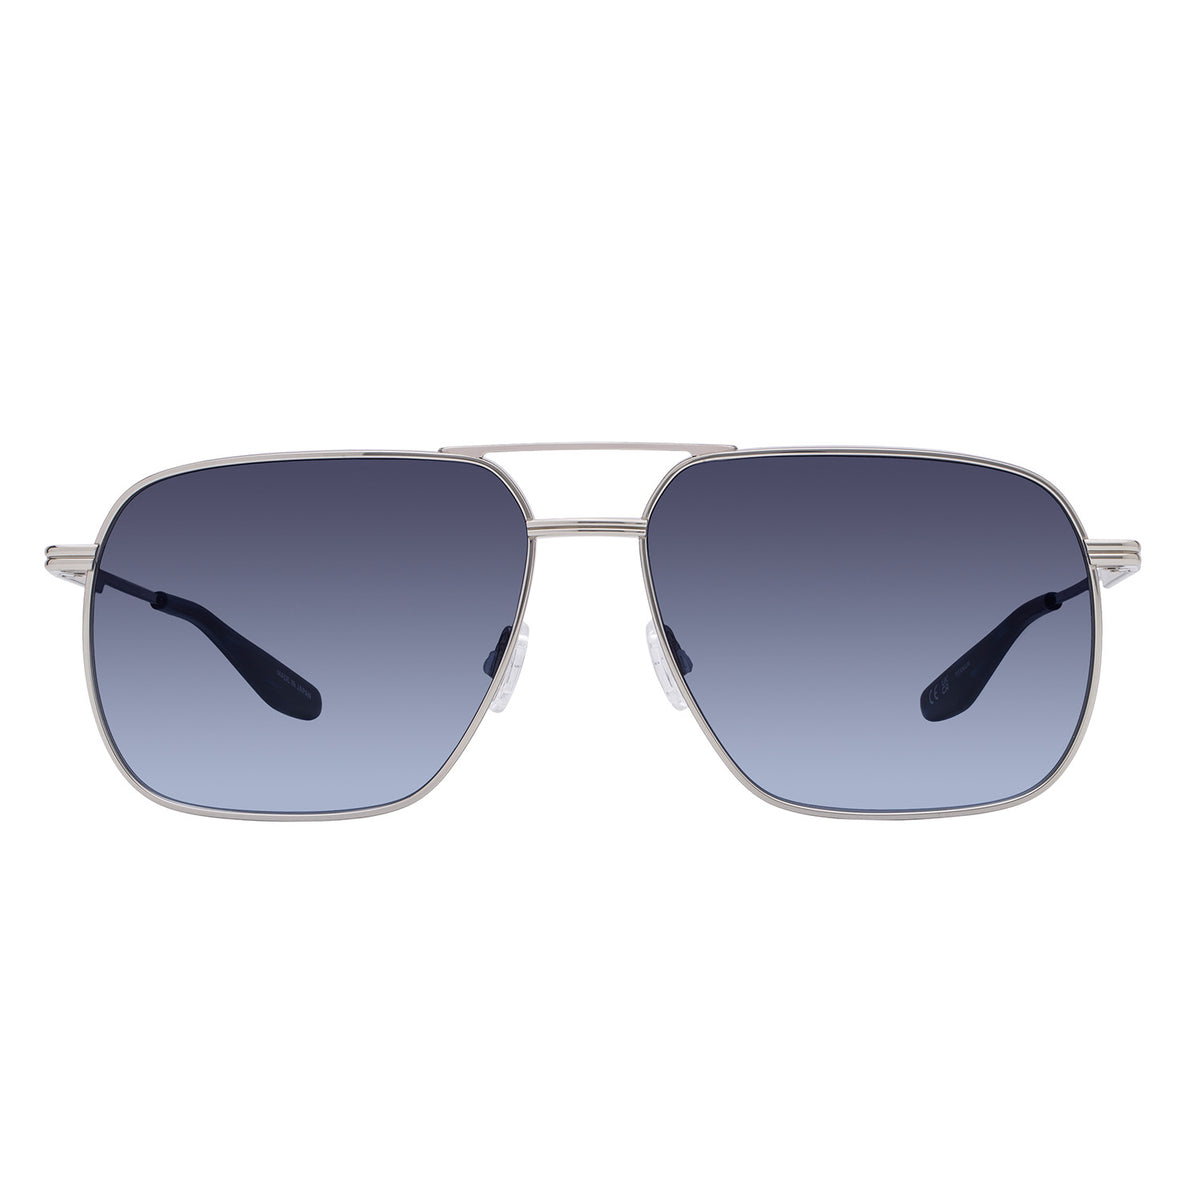 James Bond Royale Sunglasses - Silver/Blue Edition - By Barton Perreira